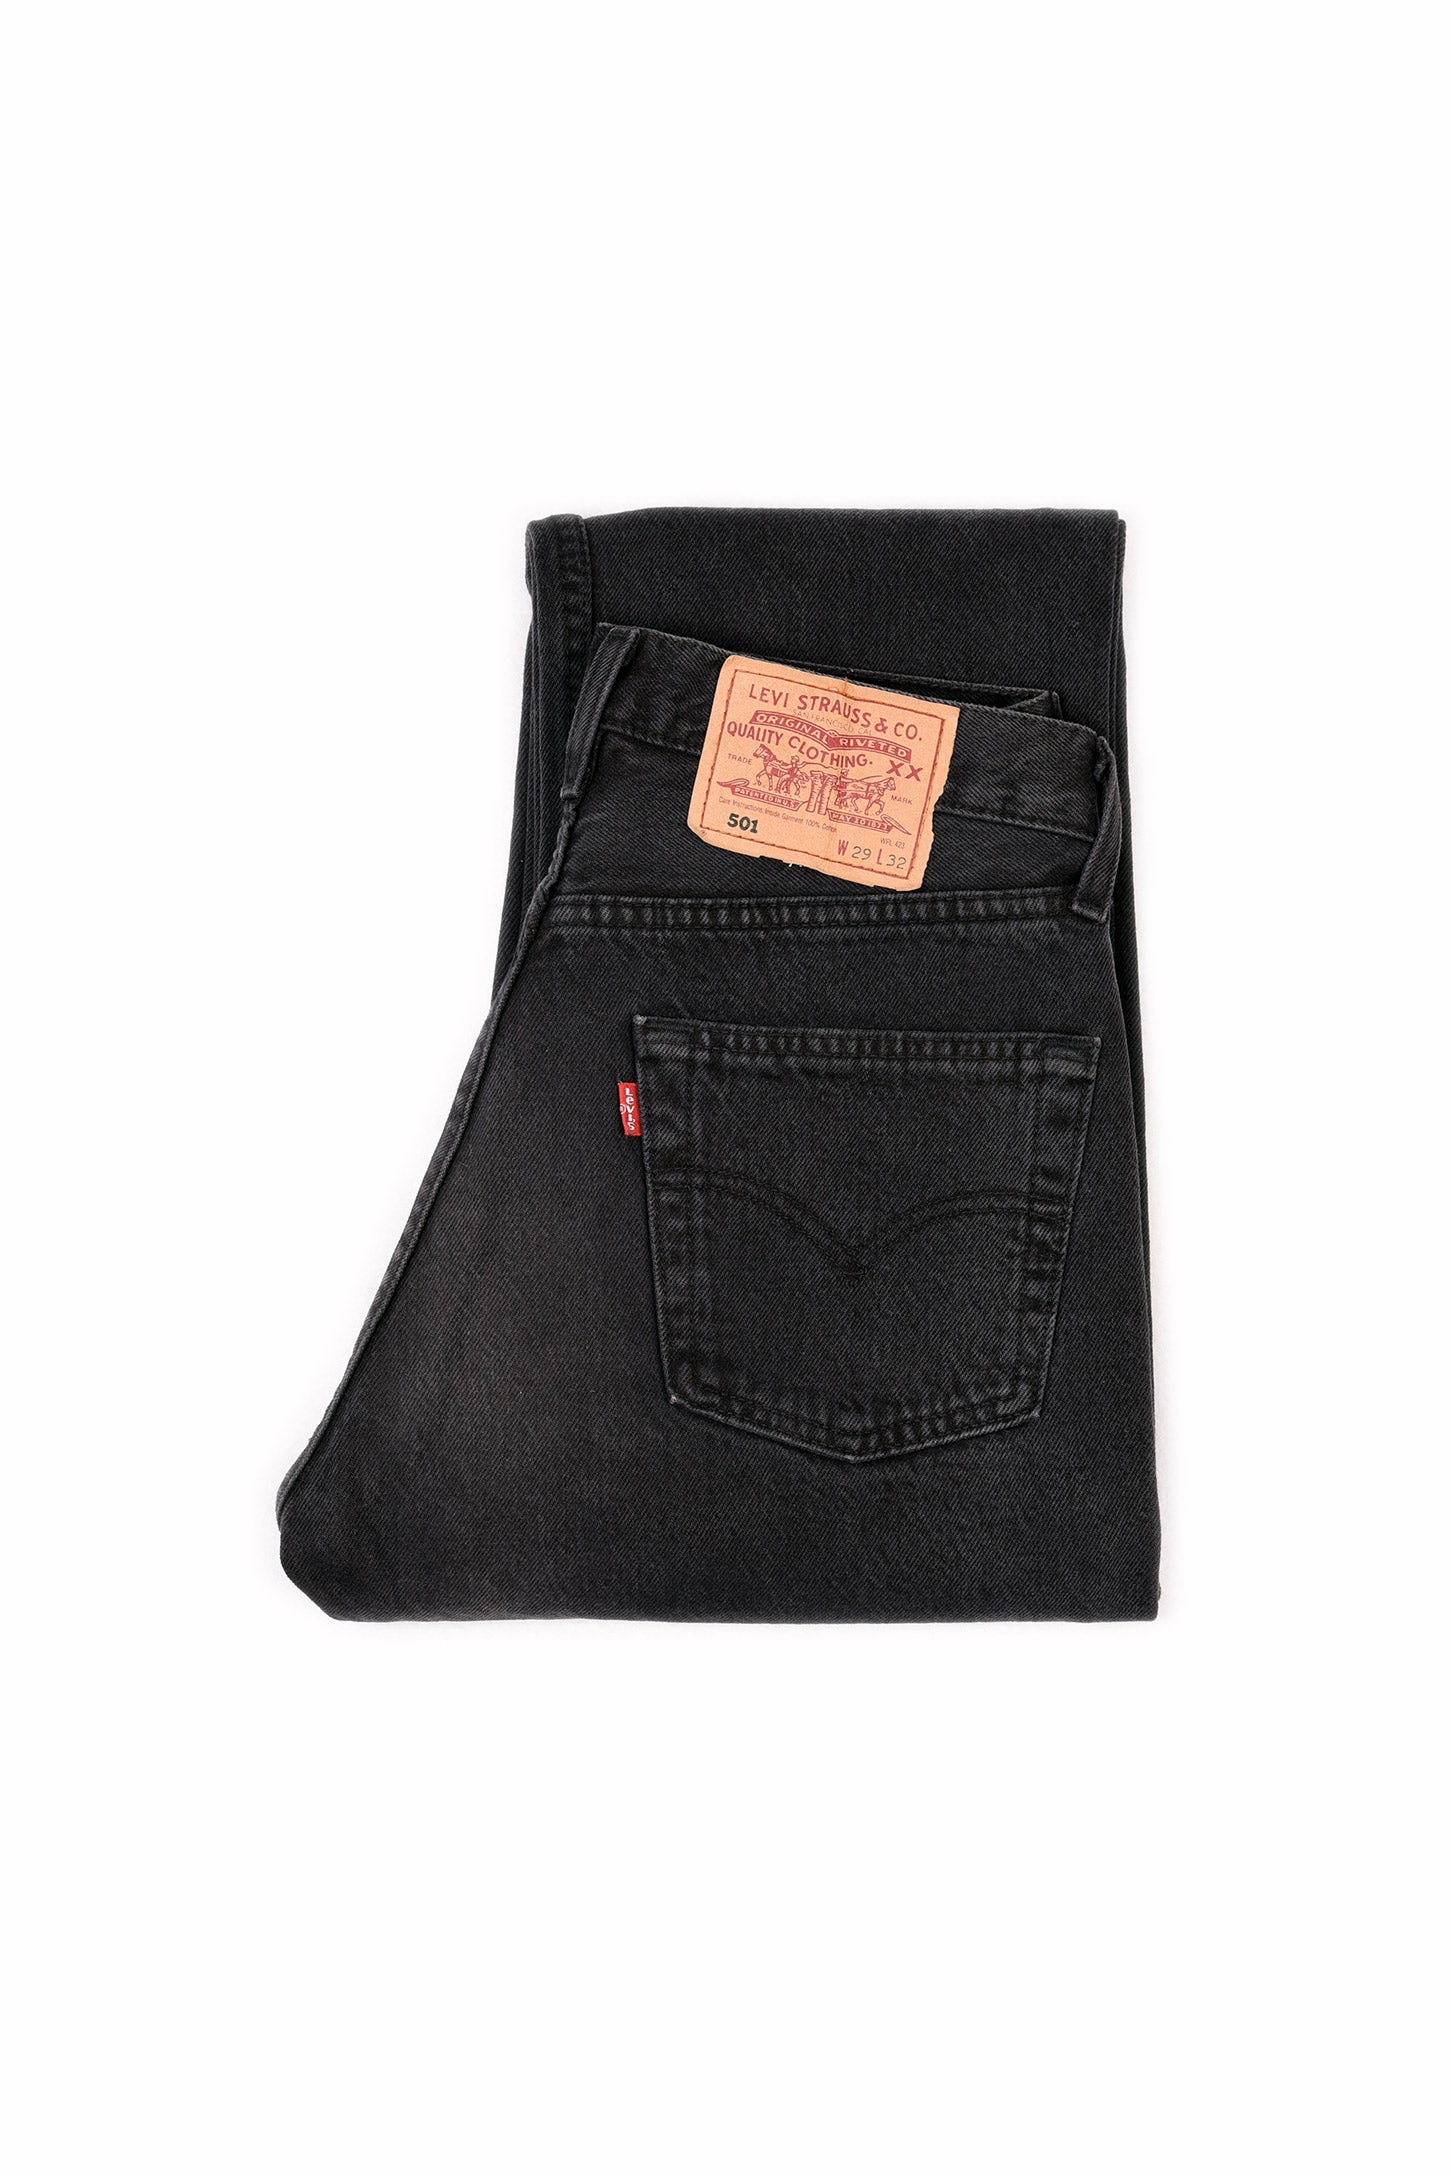 Levi S 501 Original Fit Jeans Washed Black Second Hand Fran O Till A